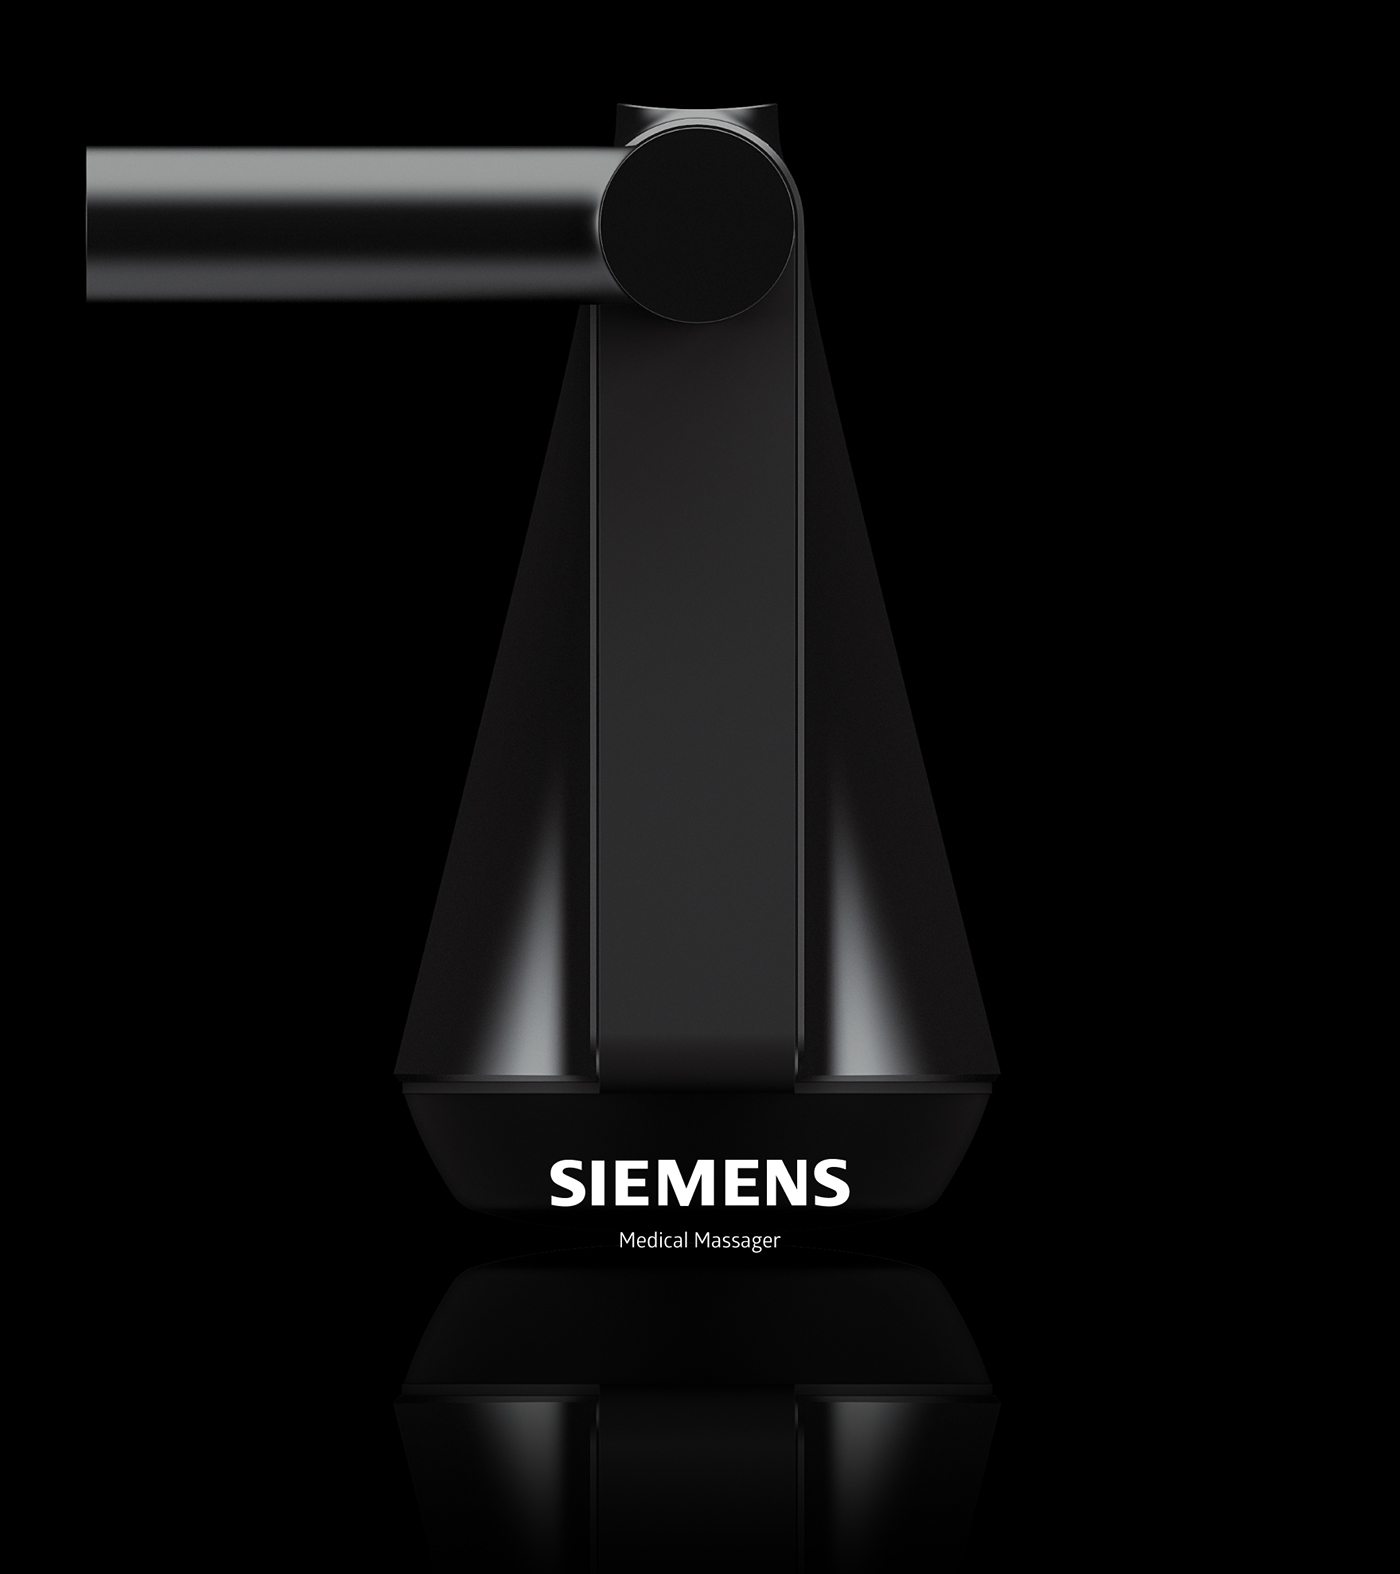 Siemens medical massager Massager medical design product lifestyle